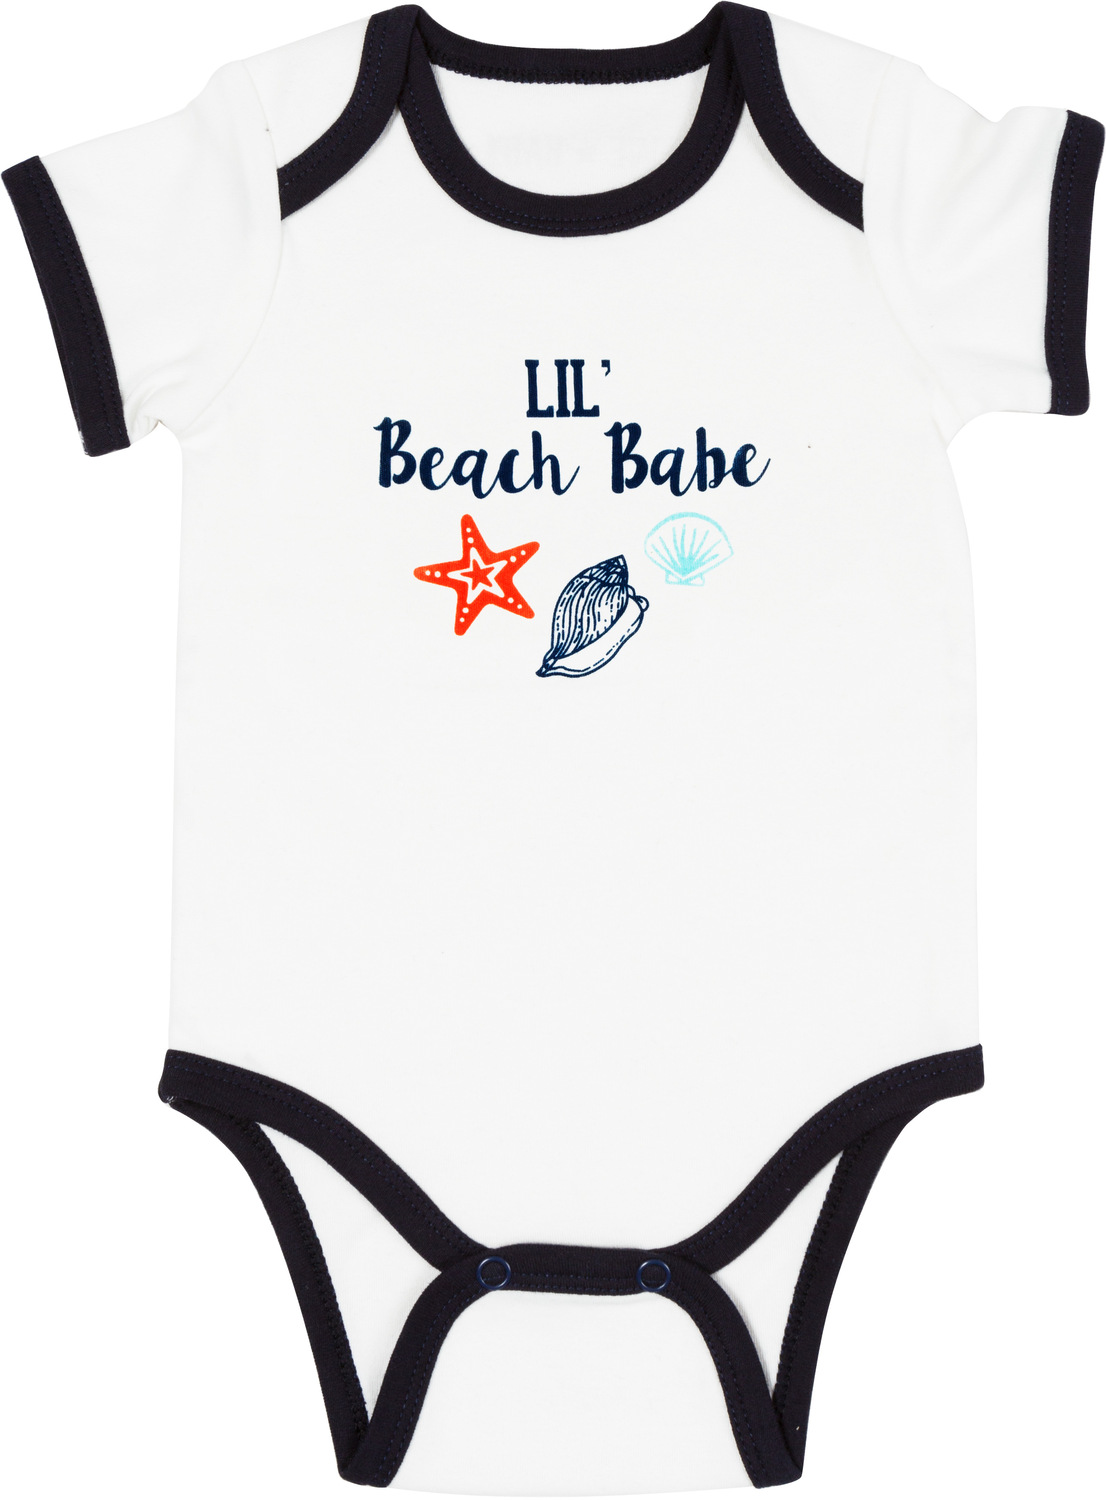 Beach Babe by We Baby - Beach Babe - 6-12 Months
Blue Trimmed Bodysuit